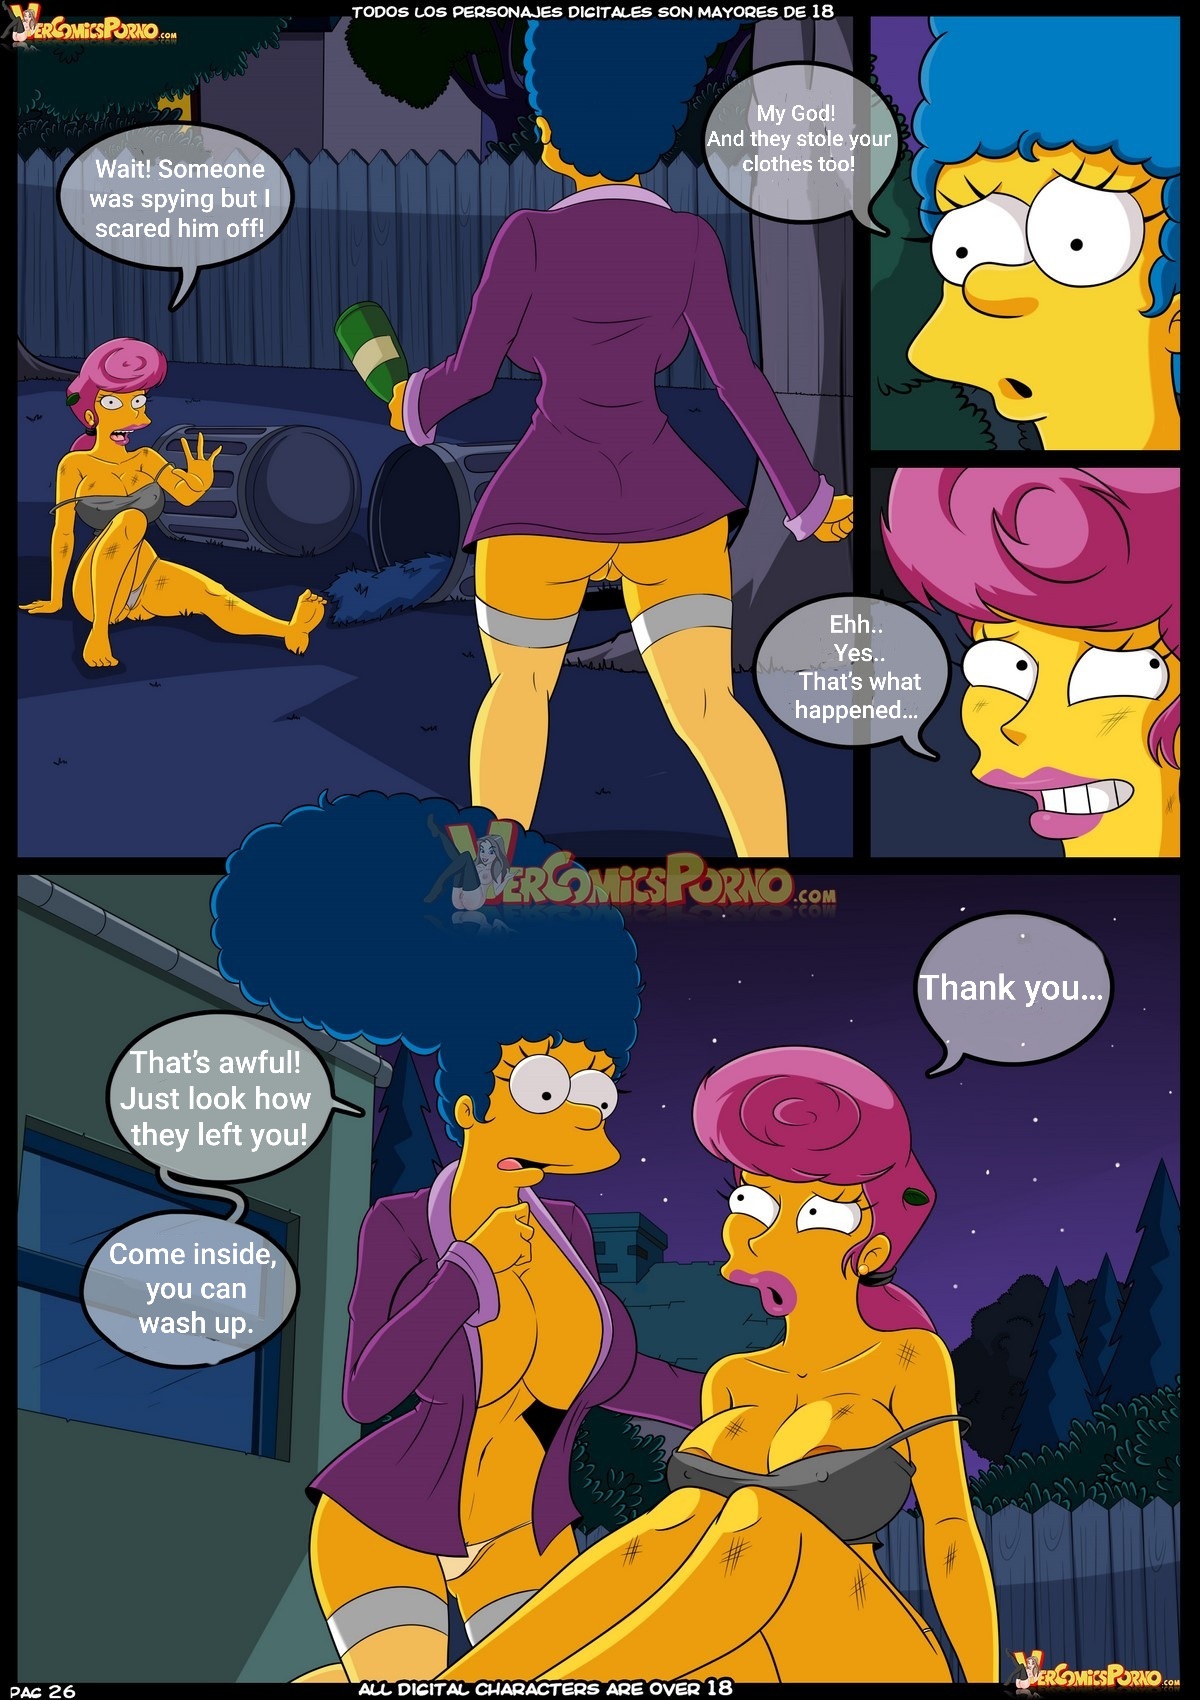 https://ilikecomix.com/comic/2021/04/Old-Habits-9-Croc-The-Simpsons-0027.jp...